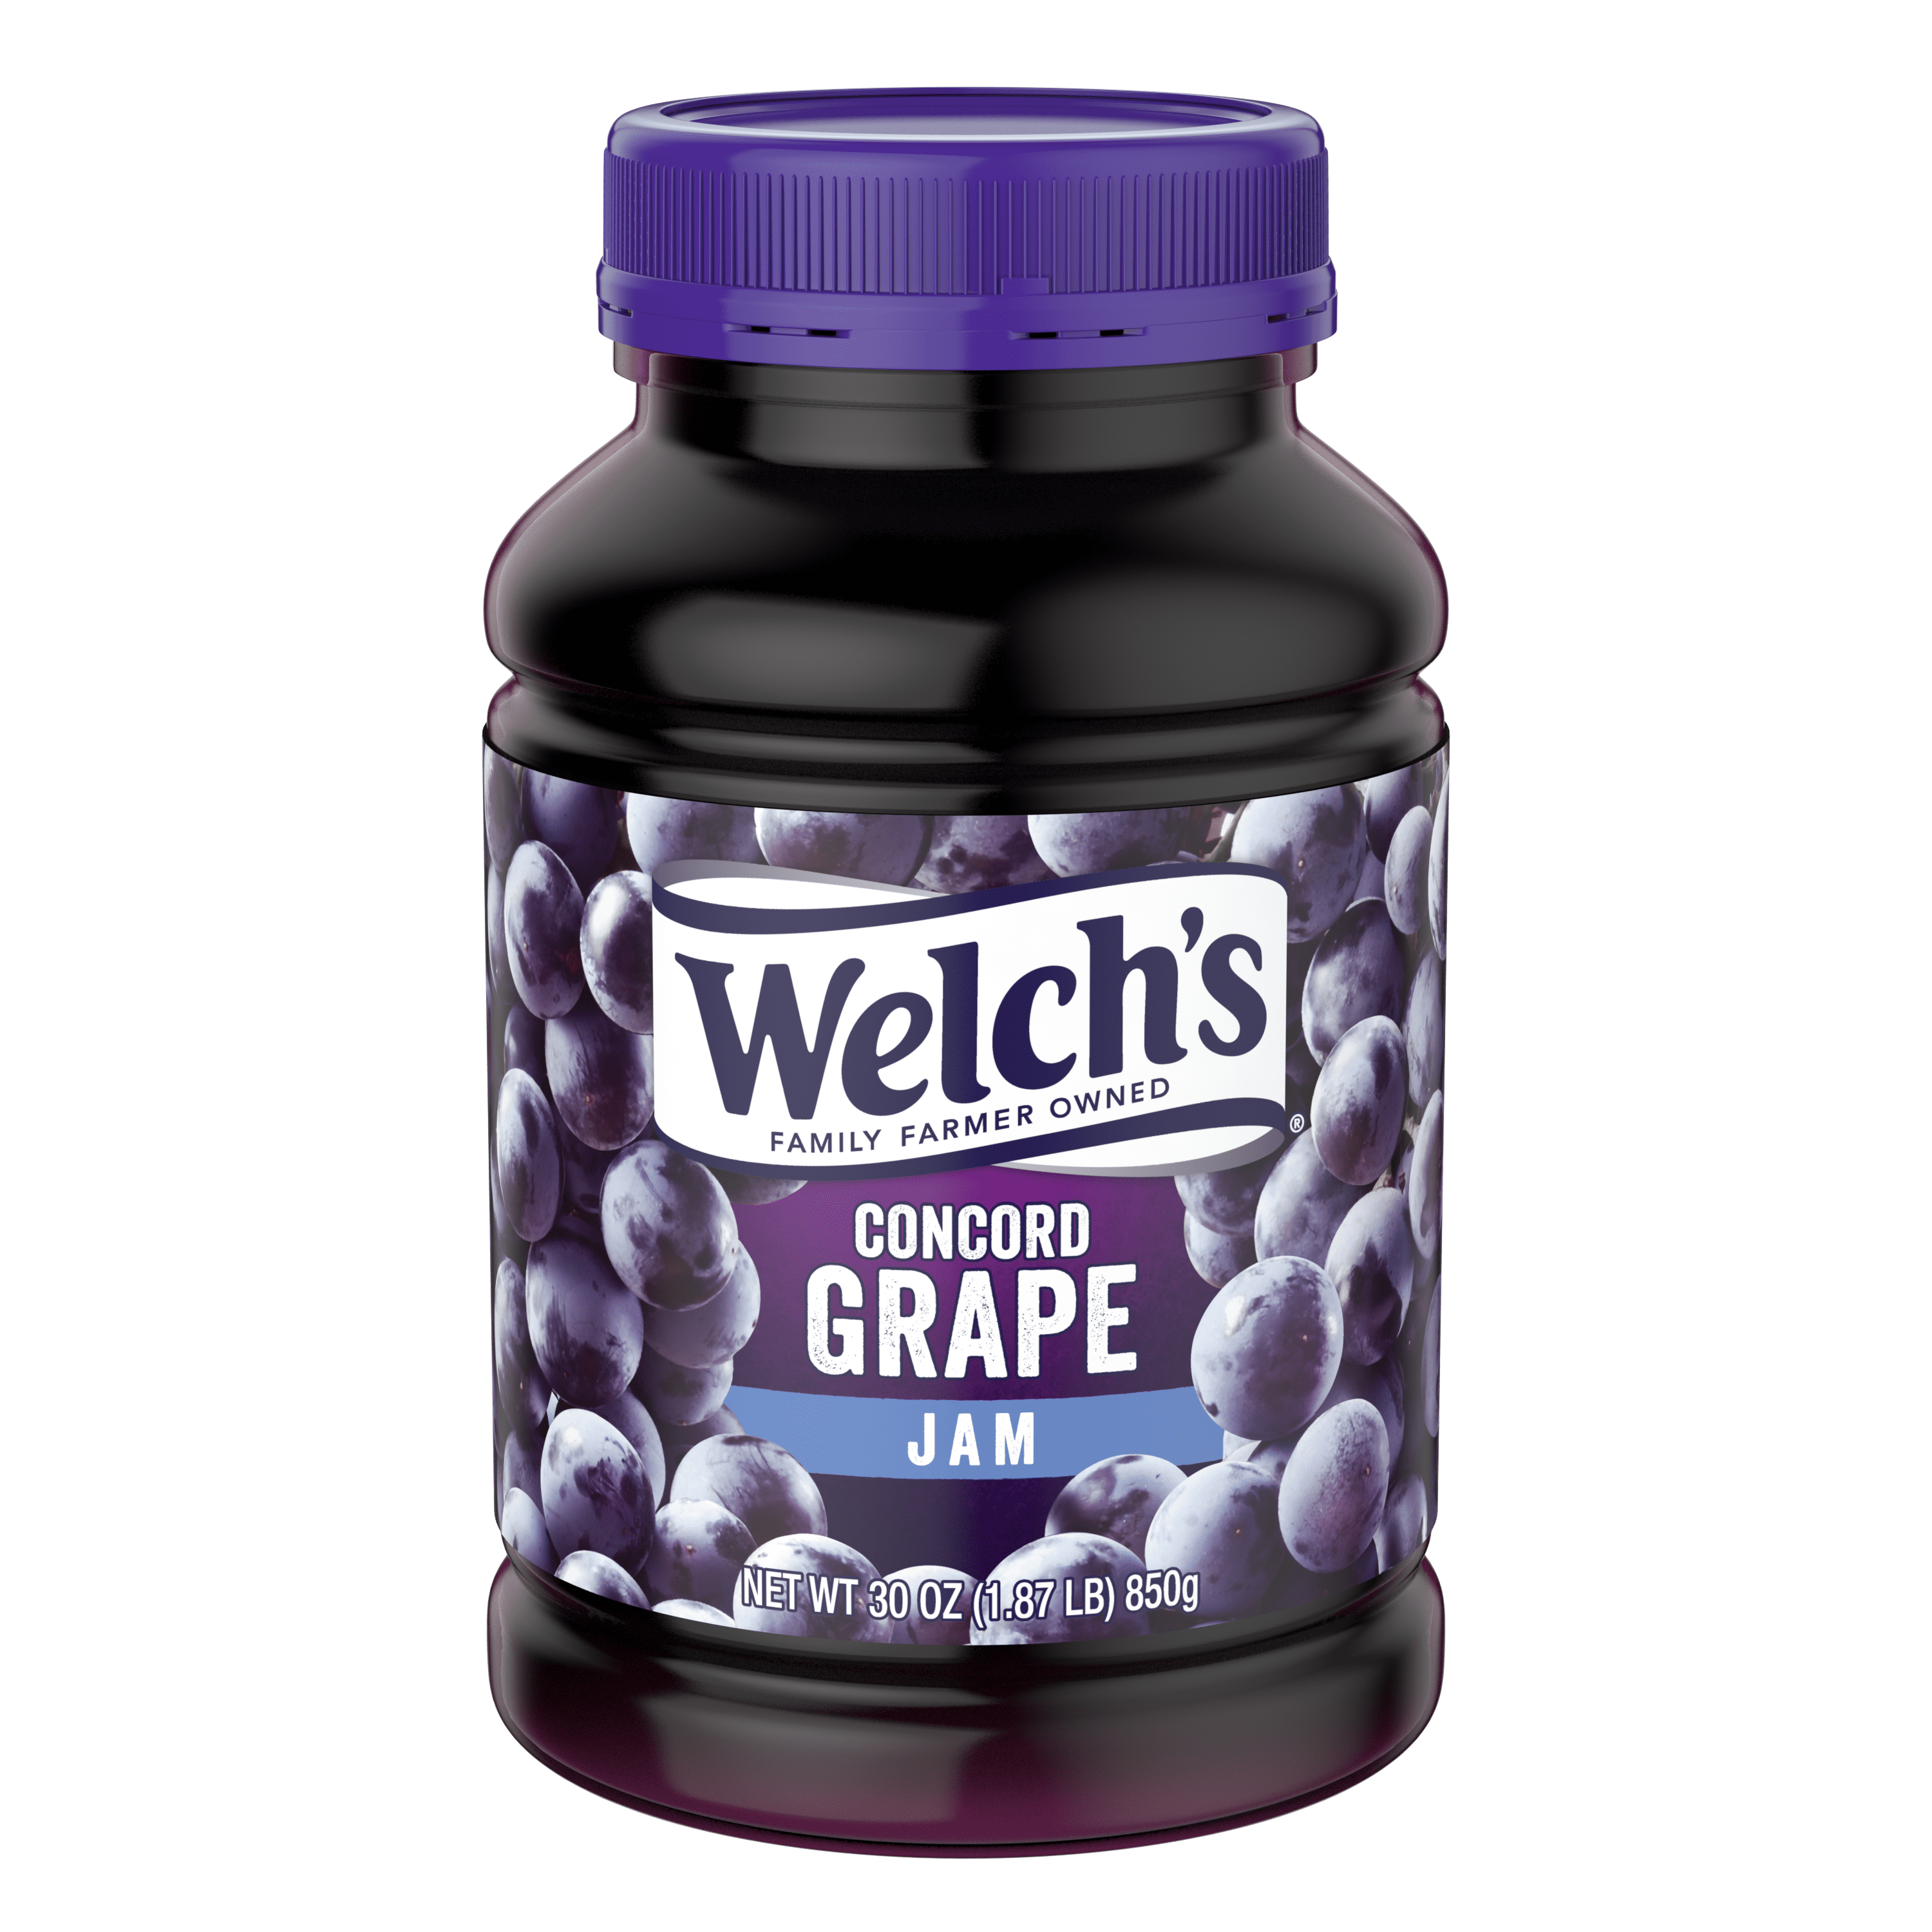 Welch's Concord Grape Jam, 30 oz Jar